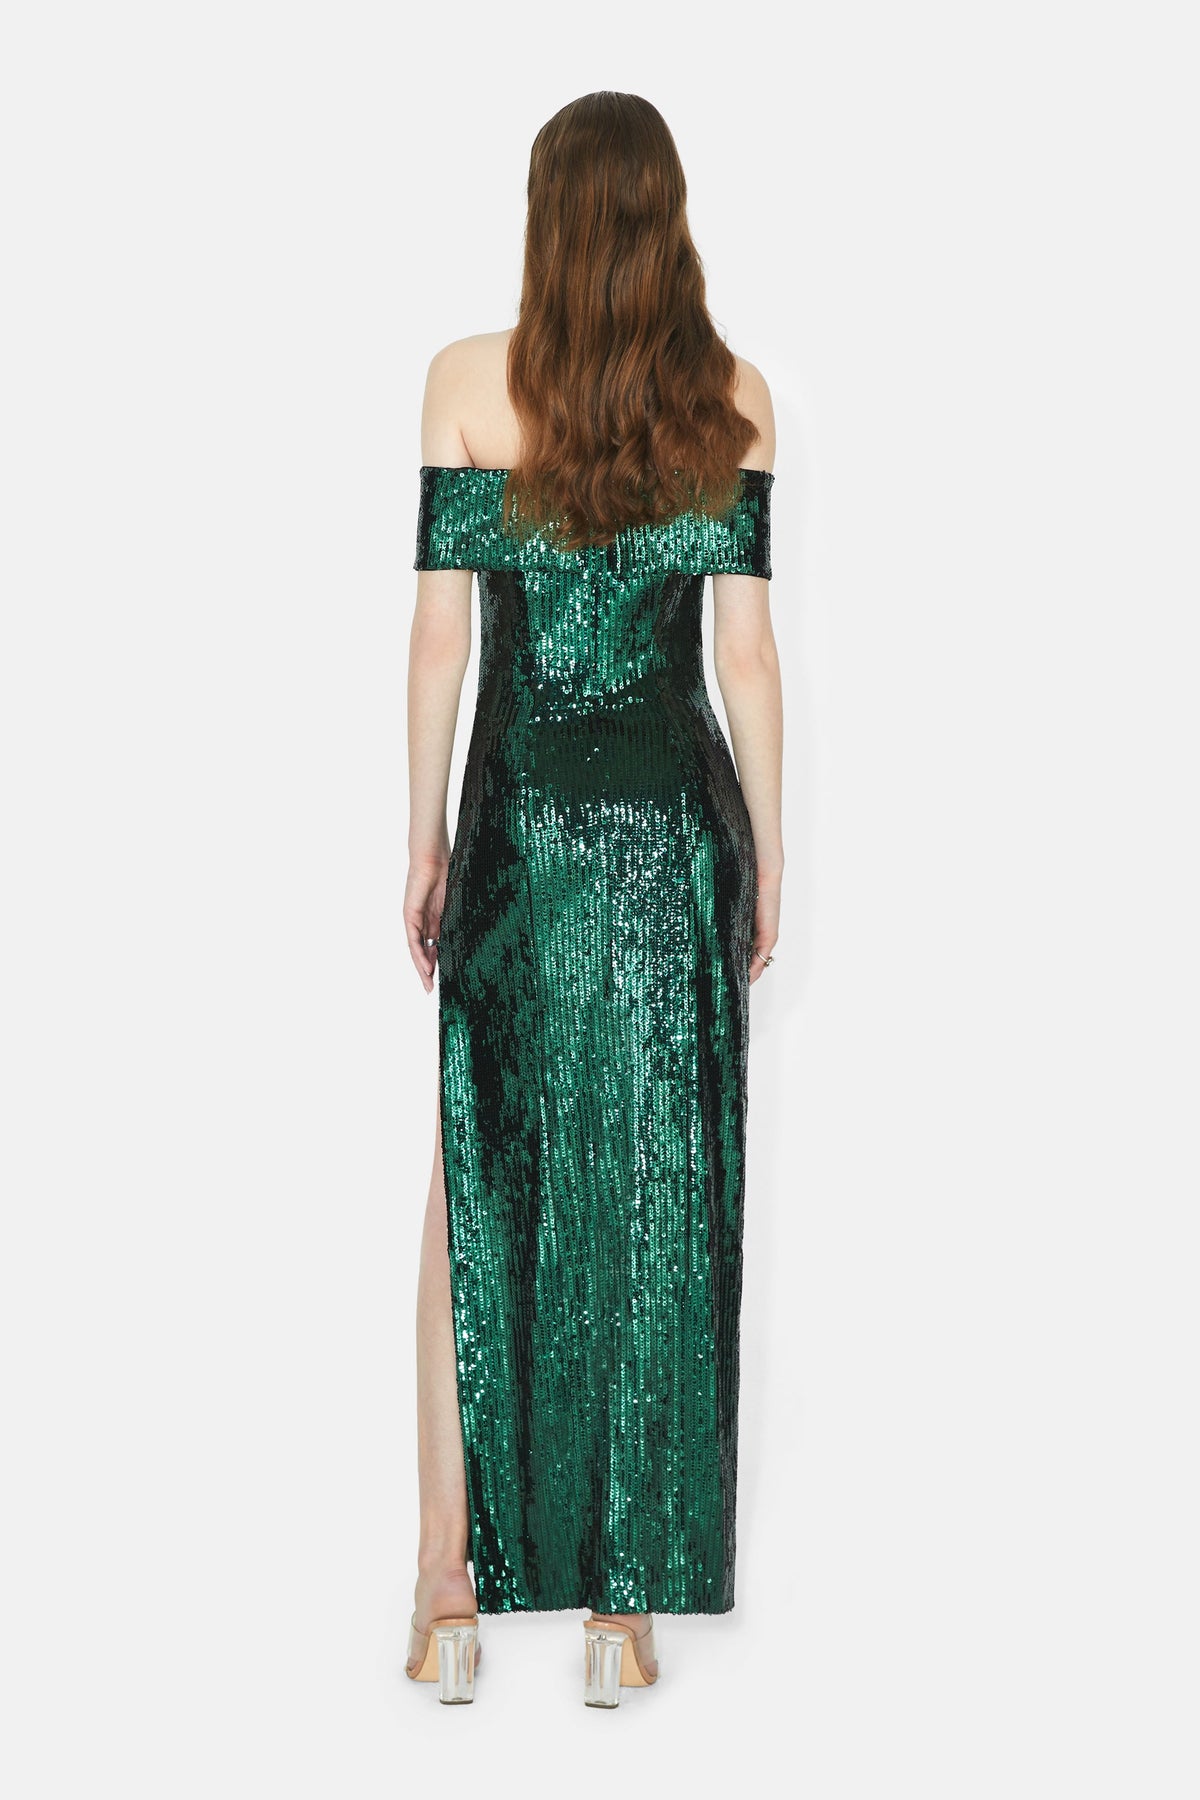 Glencoe Dress in Emerald